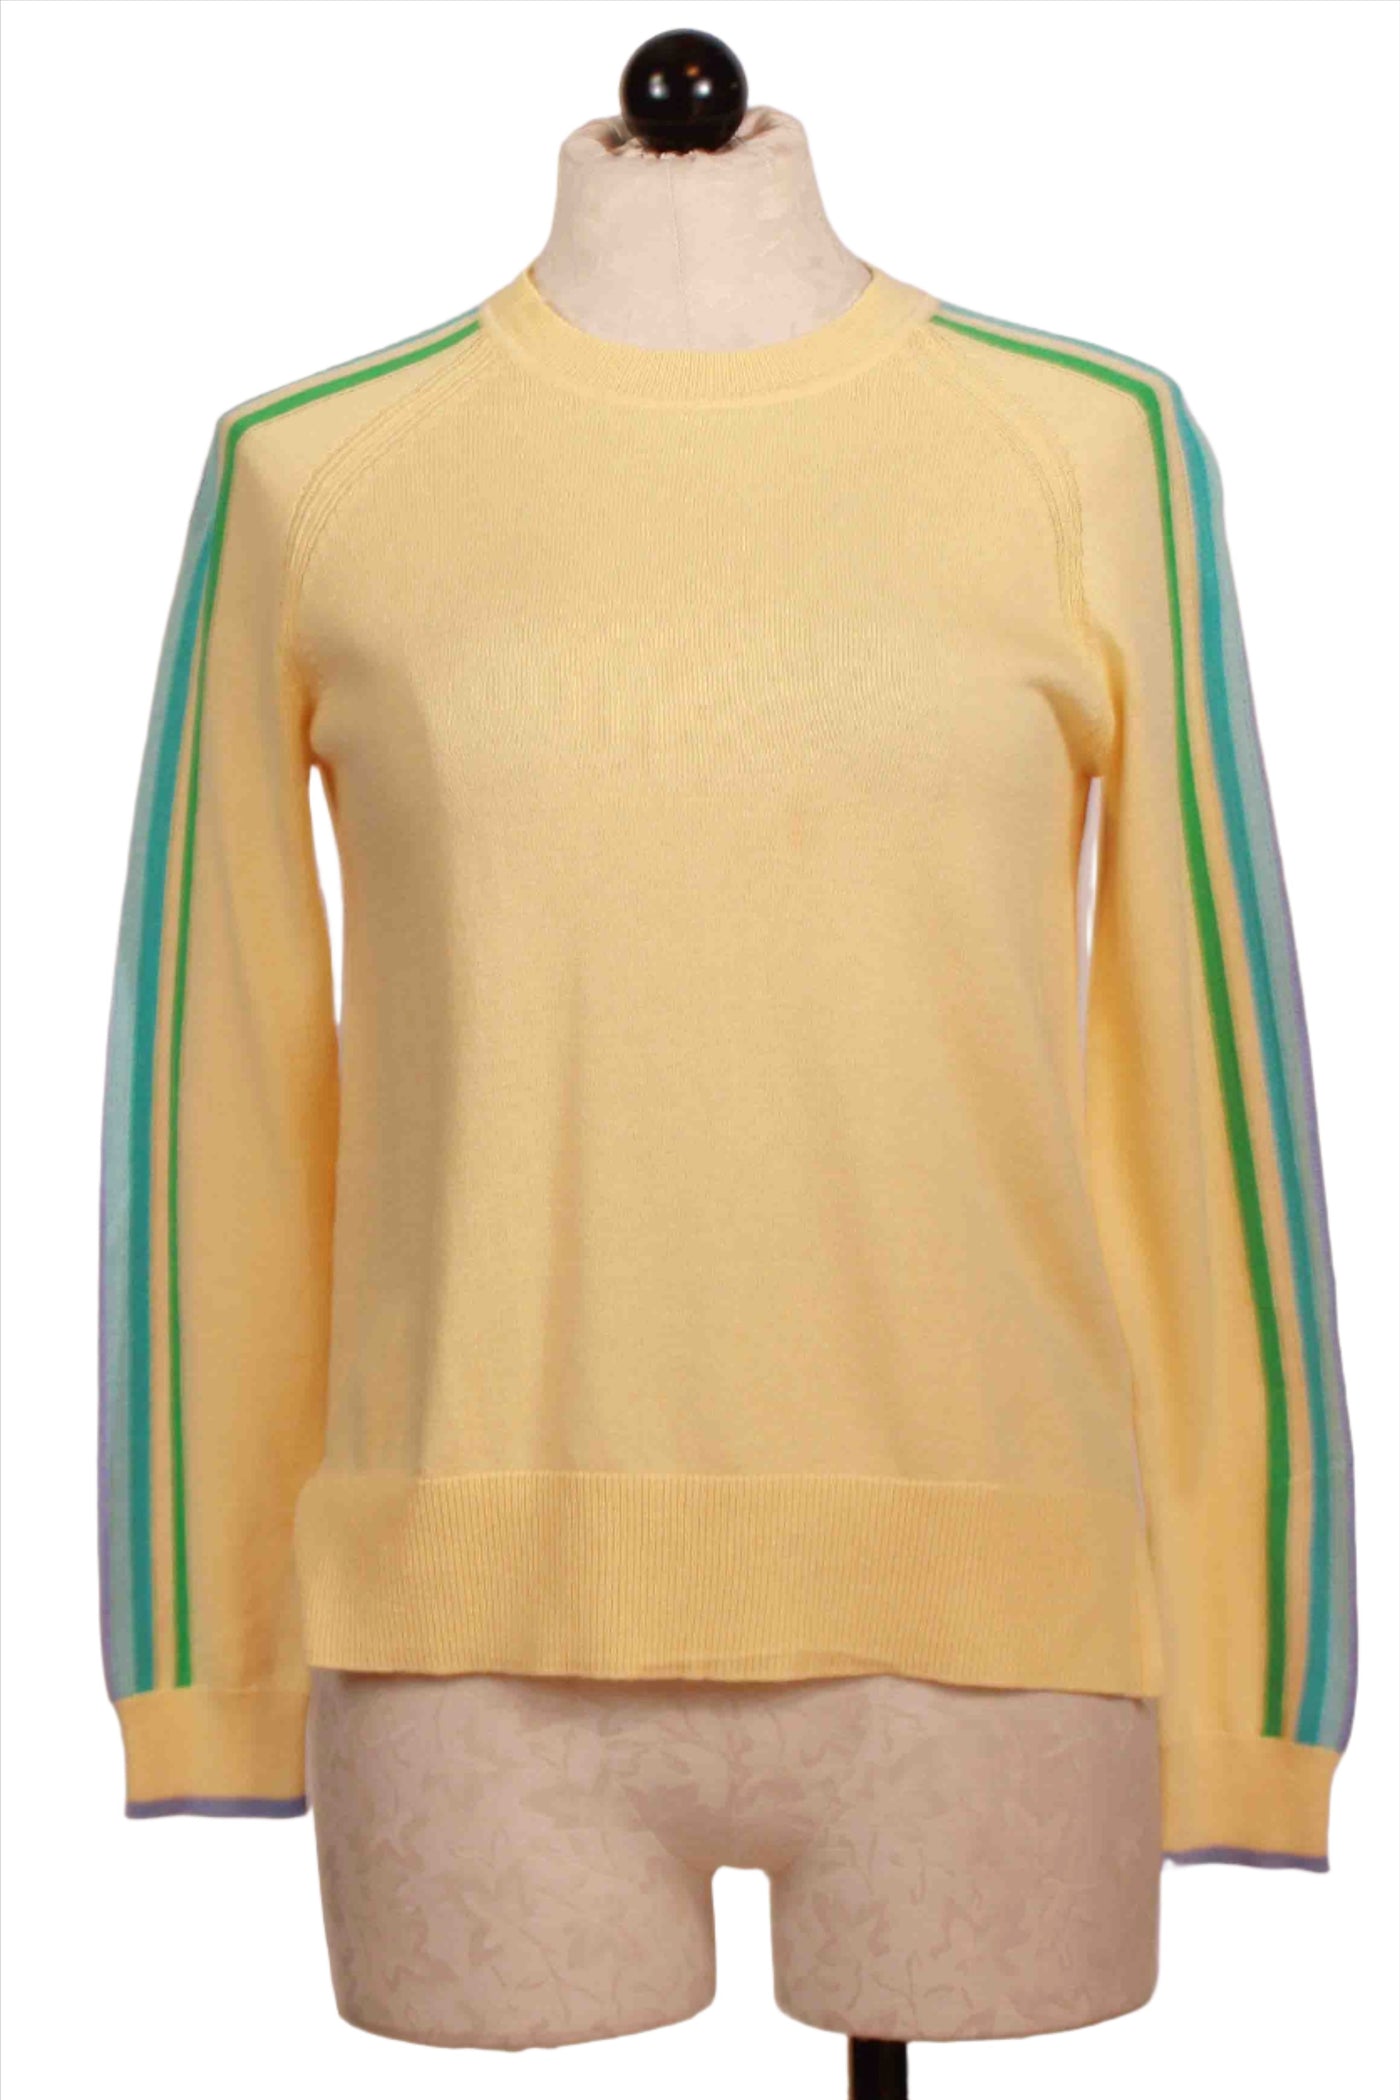 Blondie colored Runaway Stripe Raglan Sleeve Sweater by Alashan Cashmere